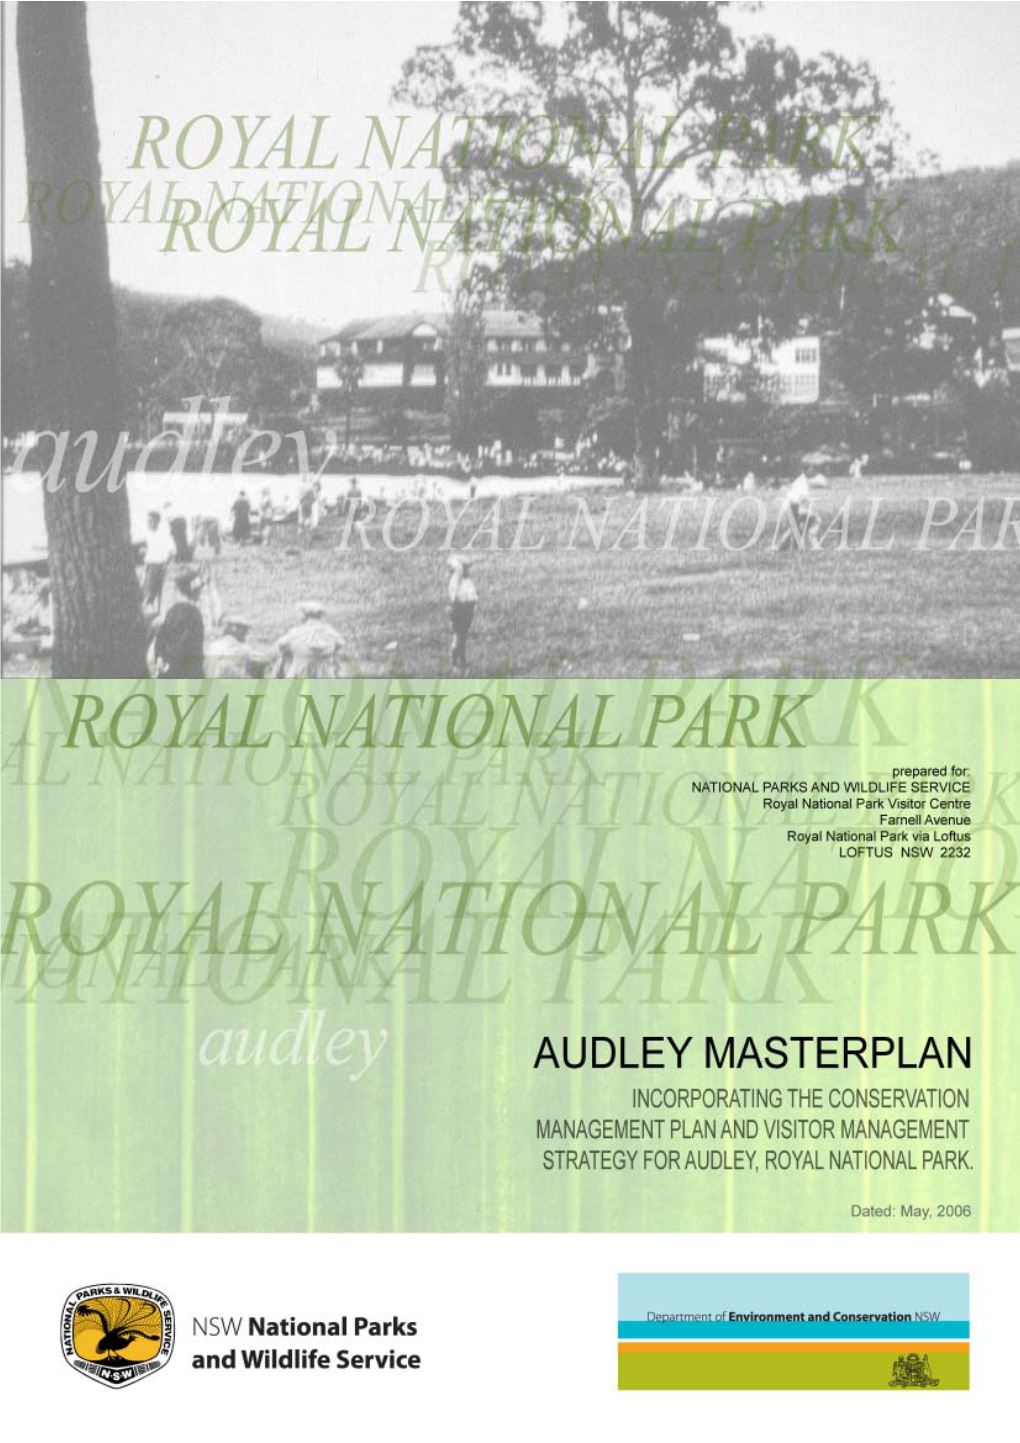 Audley Masterplan, Royal National Park